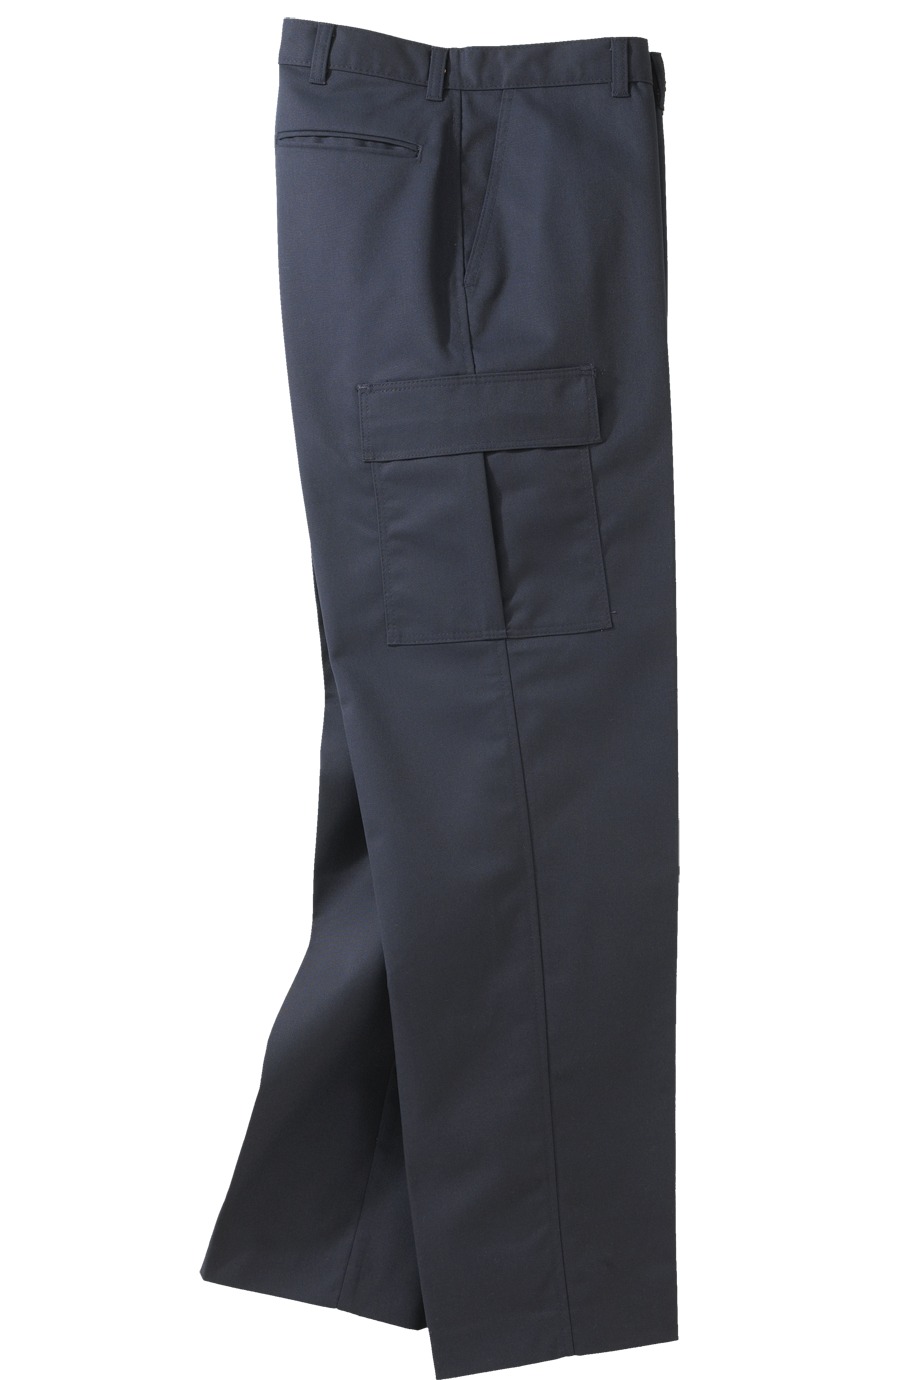 Edwards Garment 2575 - Men's Blended Chino Cargo Pant